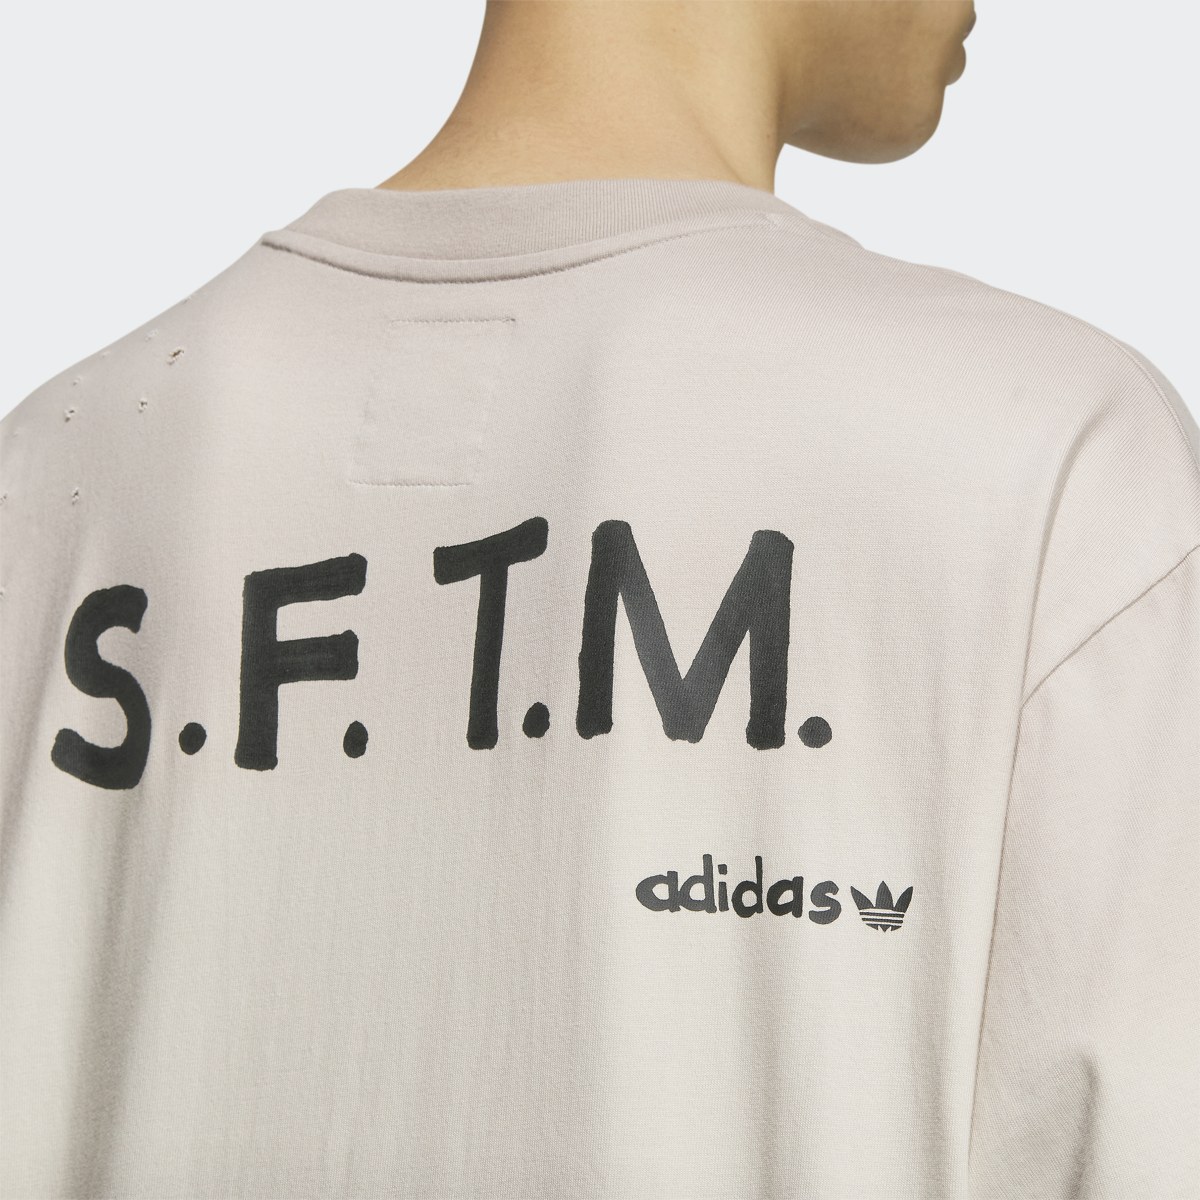 Adidas SFTM T-Shirt (Gender Neutral). 7